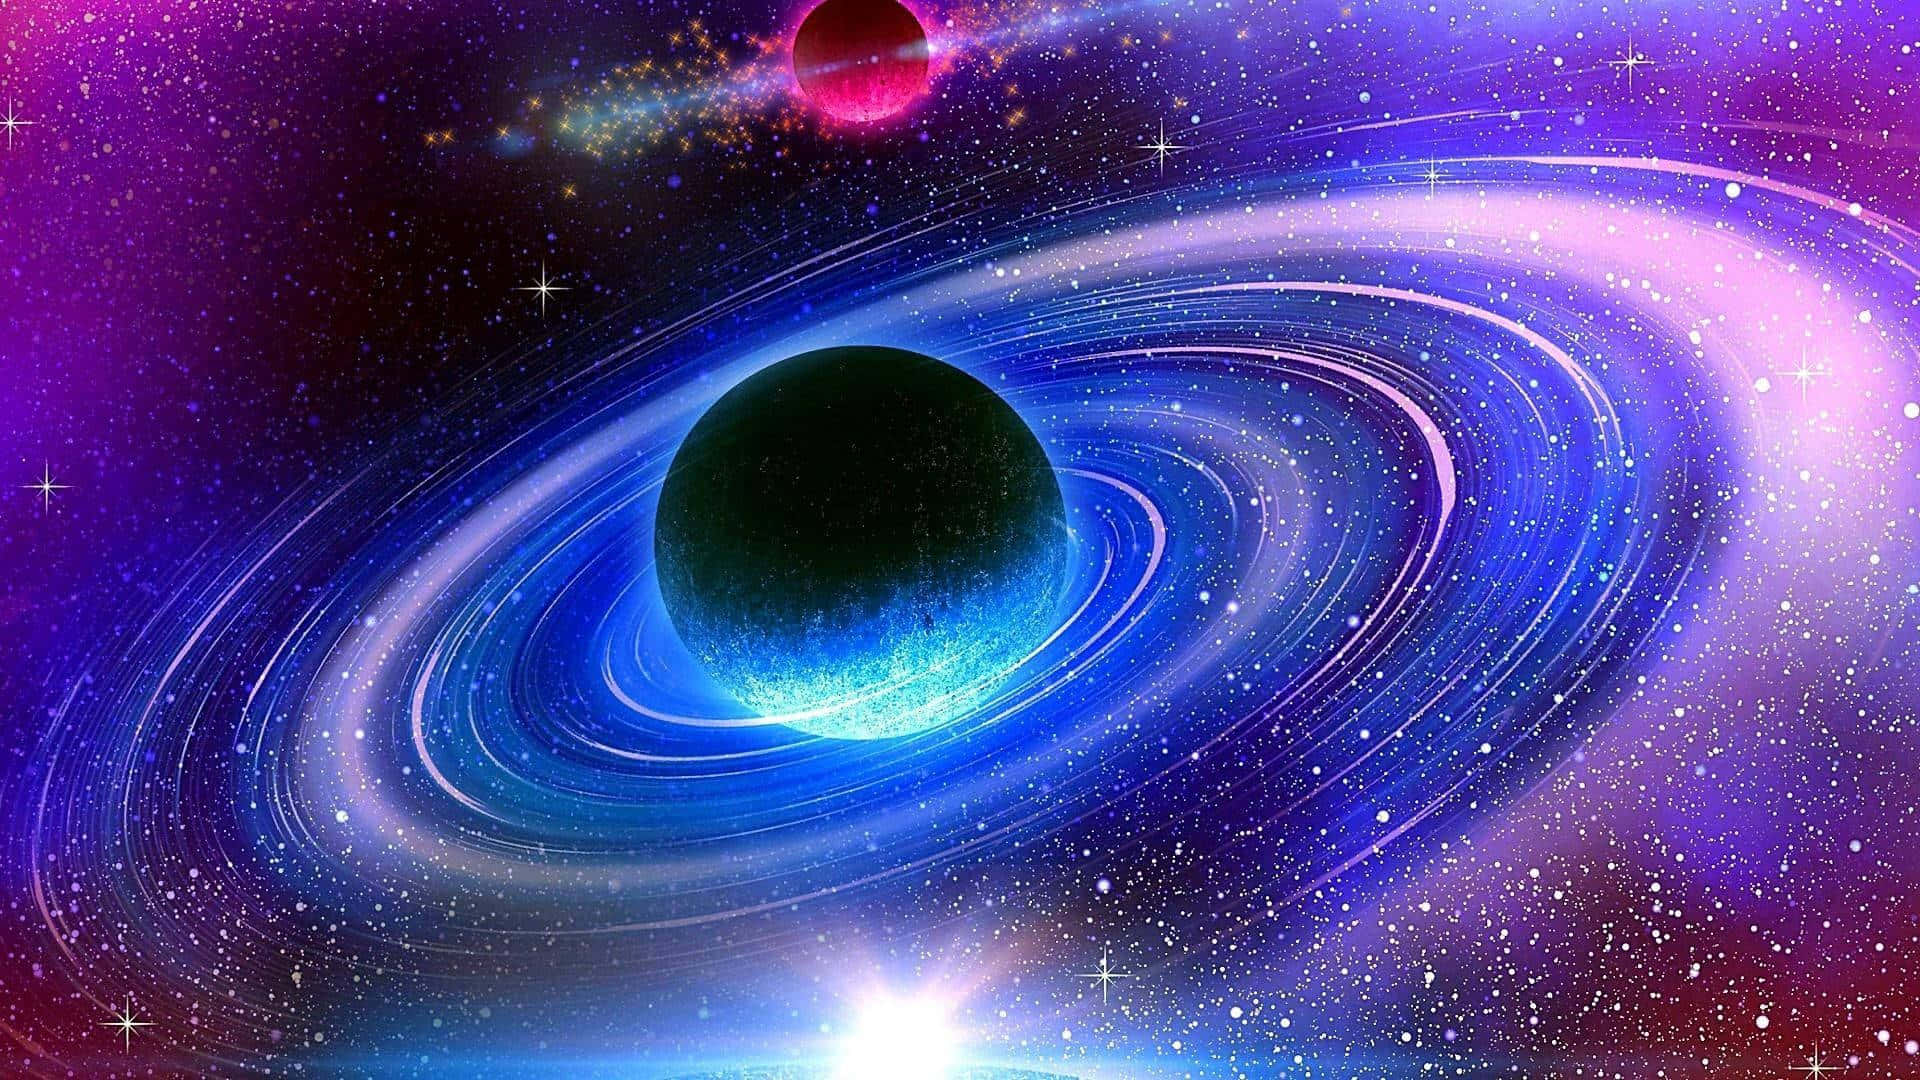 Universe Themed Background Image Background